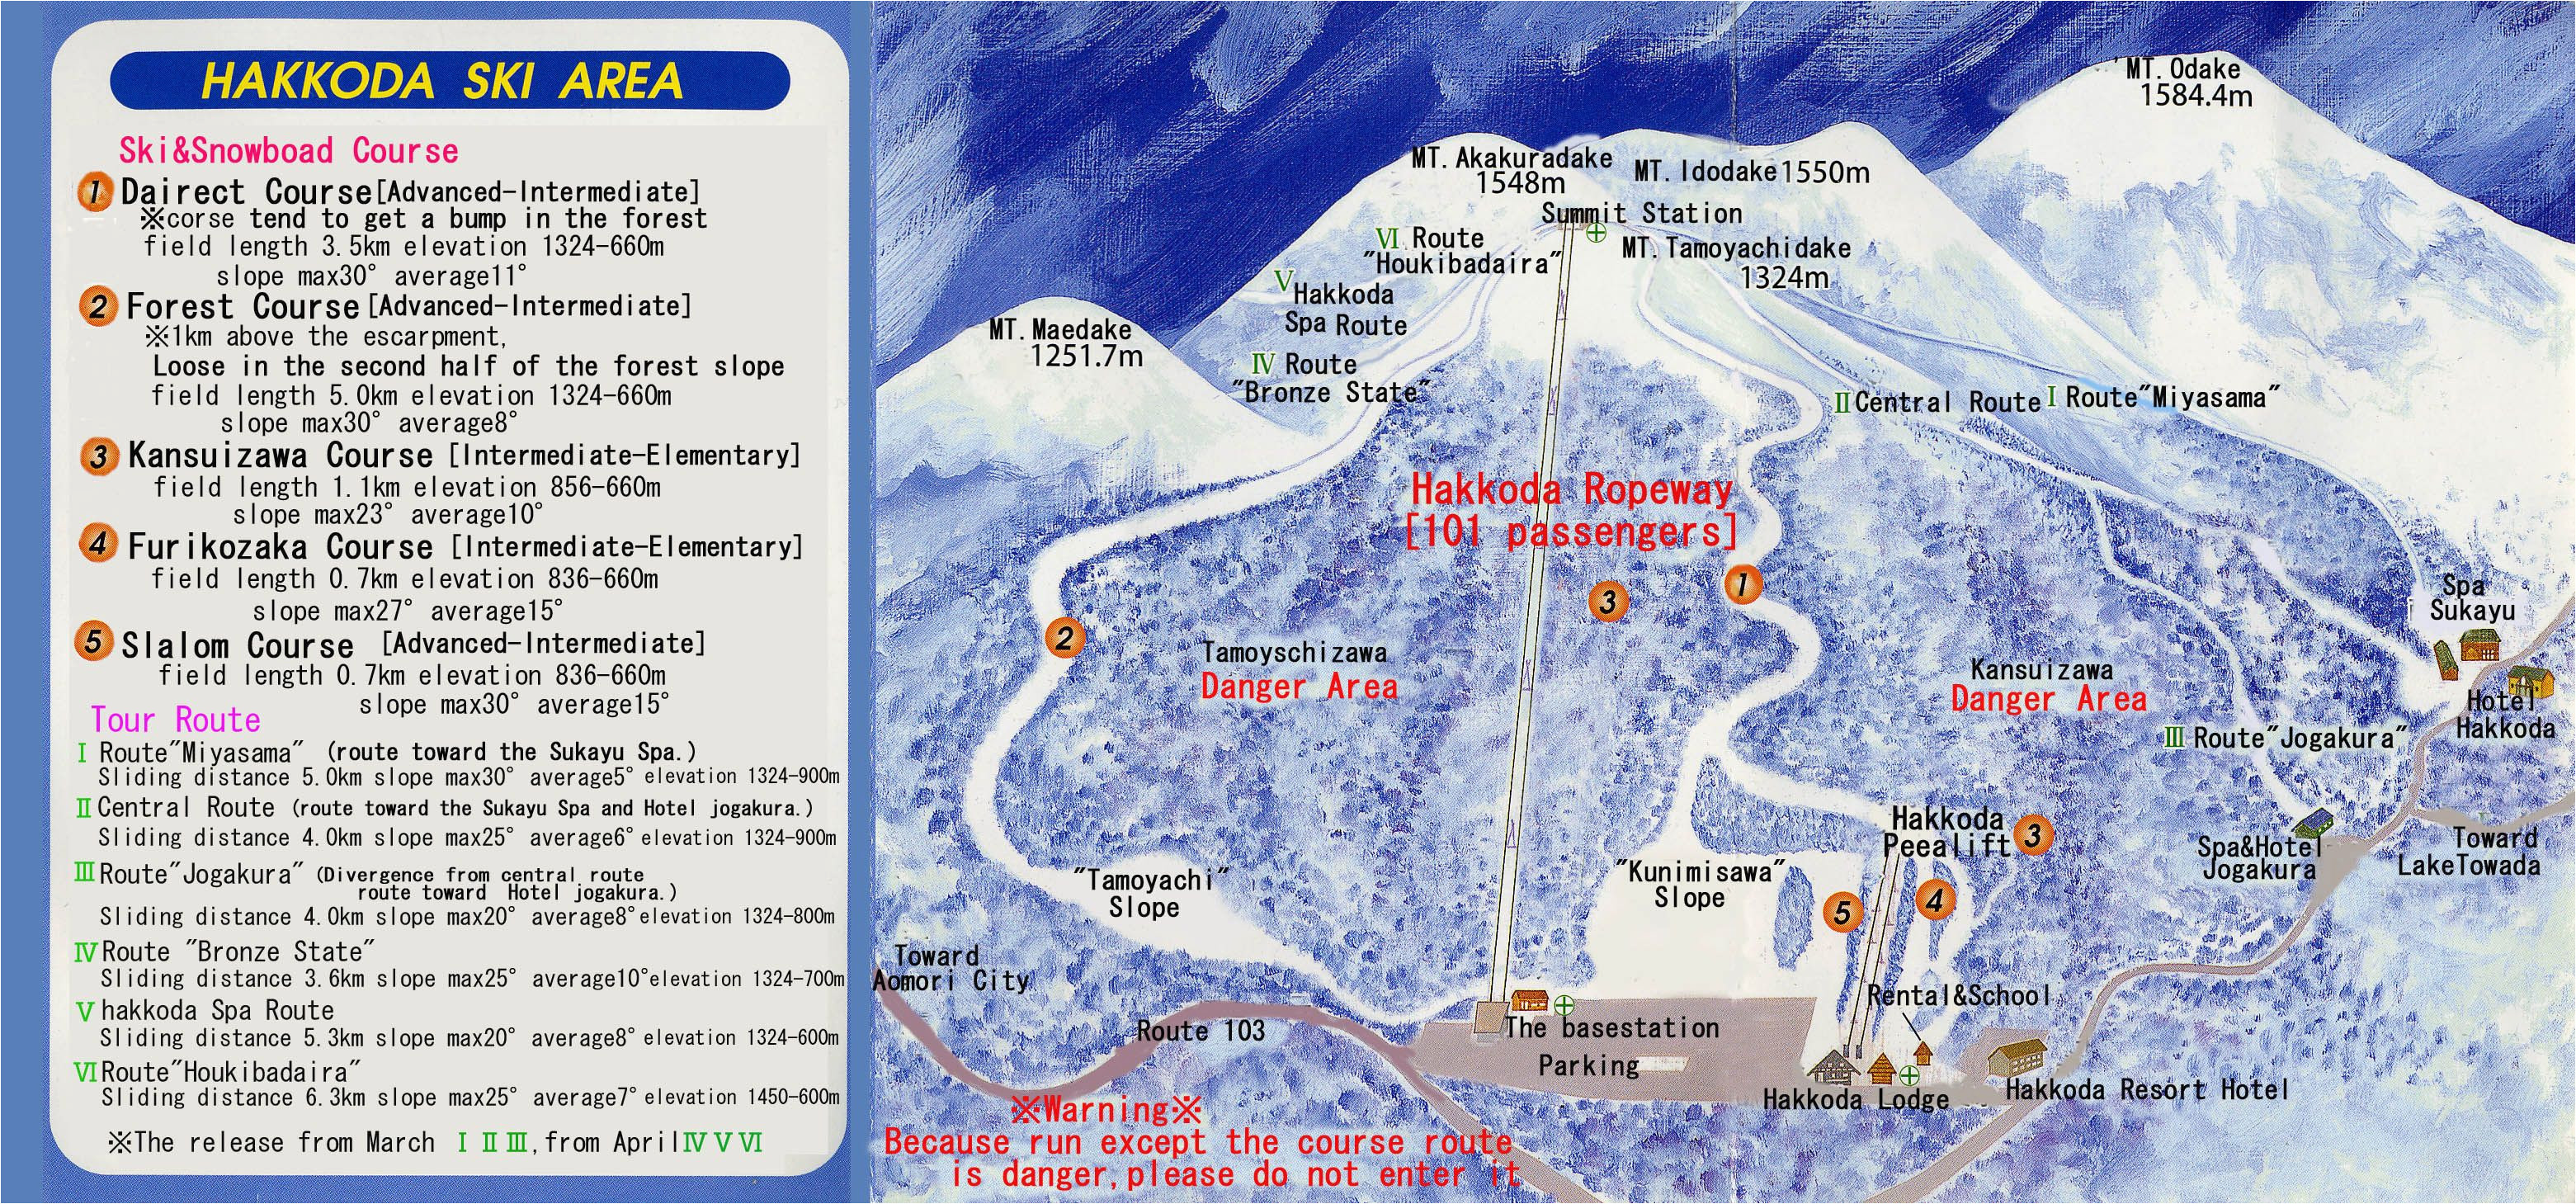 hakkoda ski resort terrain snowboard hakkoda japan places i ve